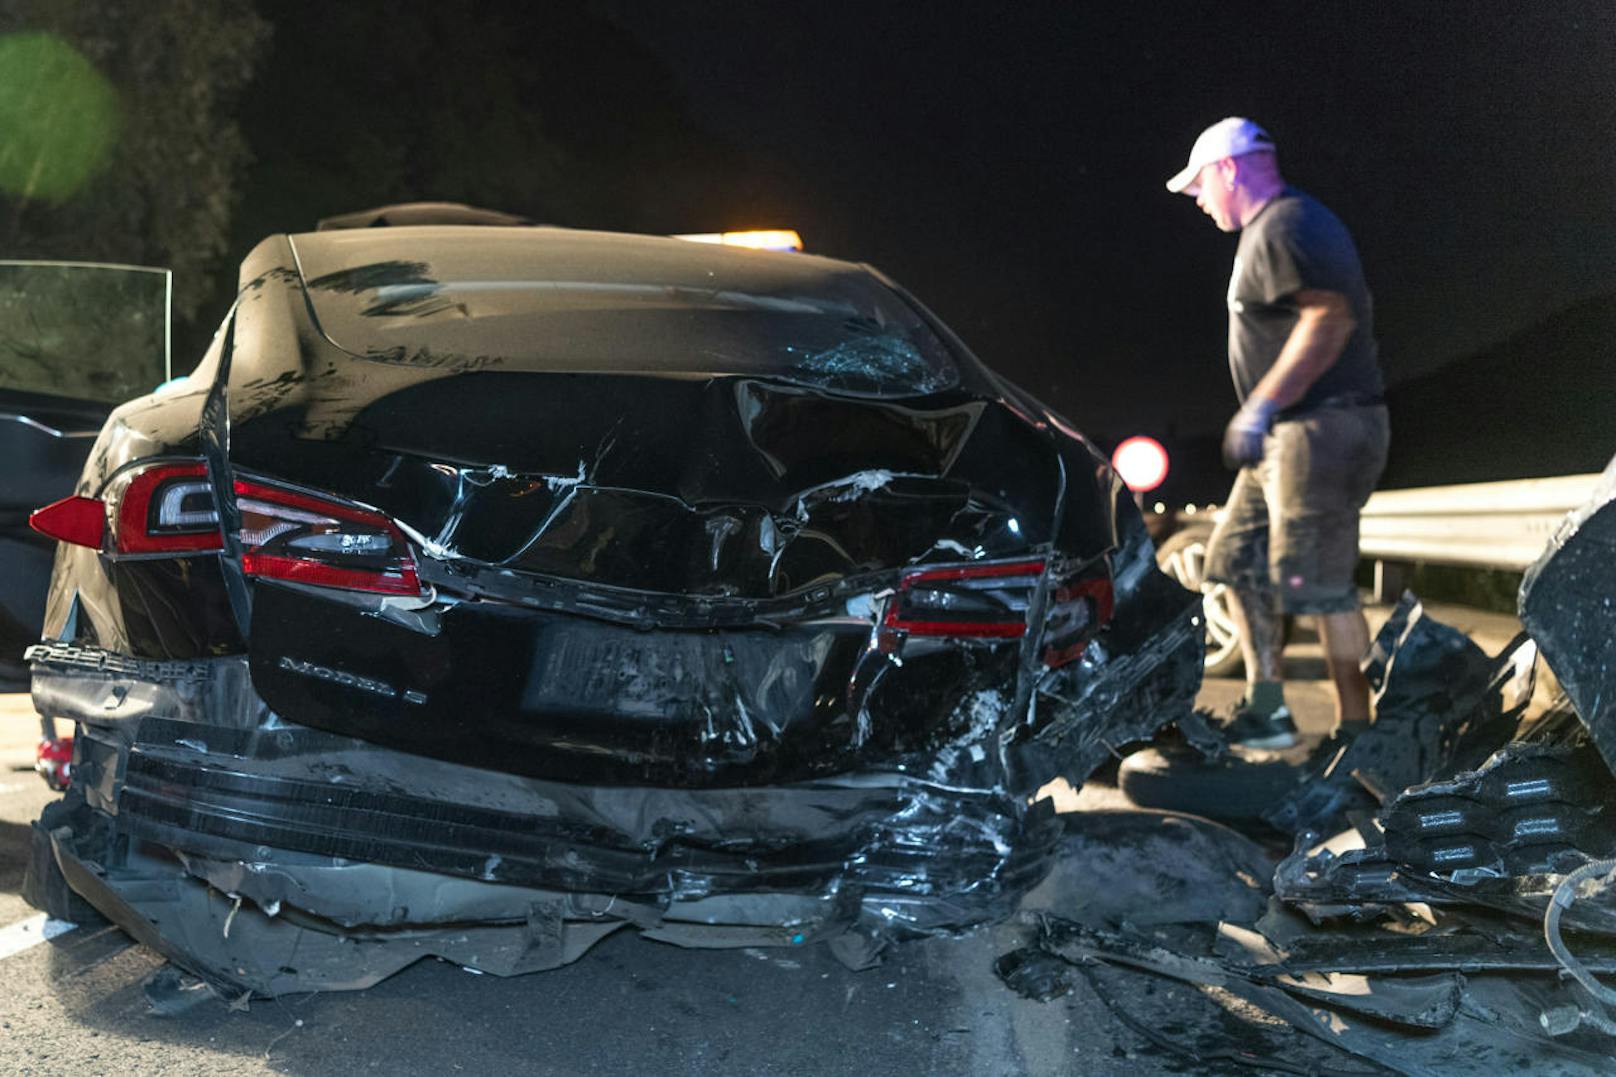 Das teure Auto wurde bei dem Unfall völlig zerstört.